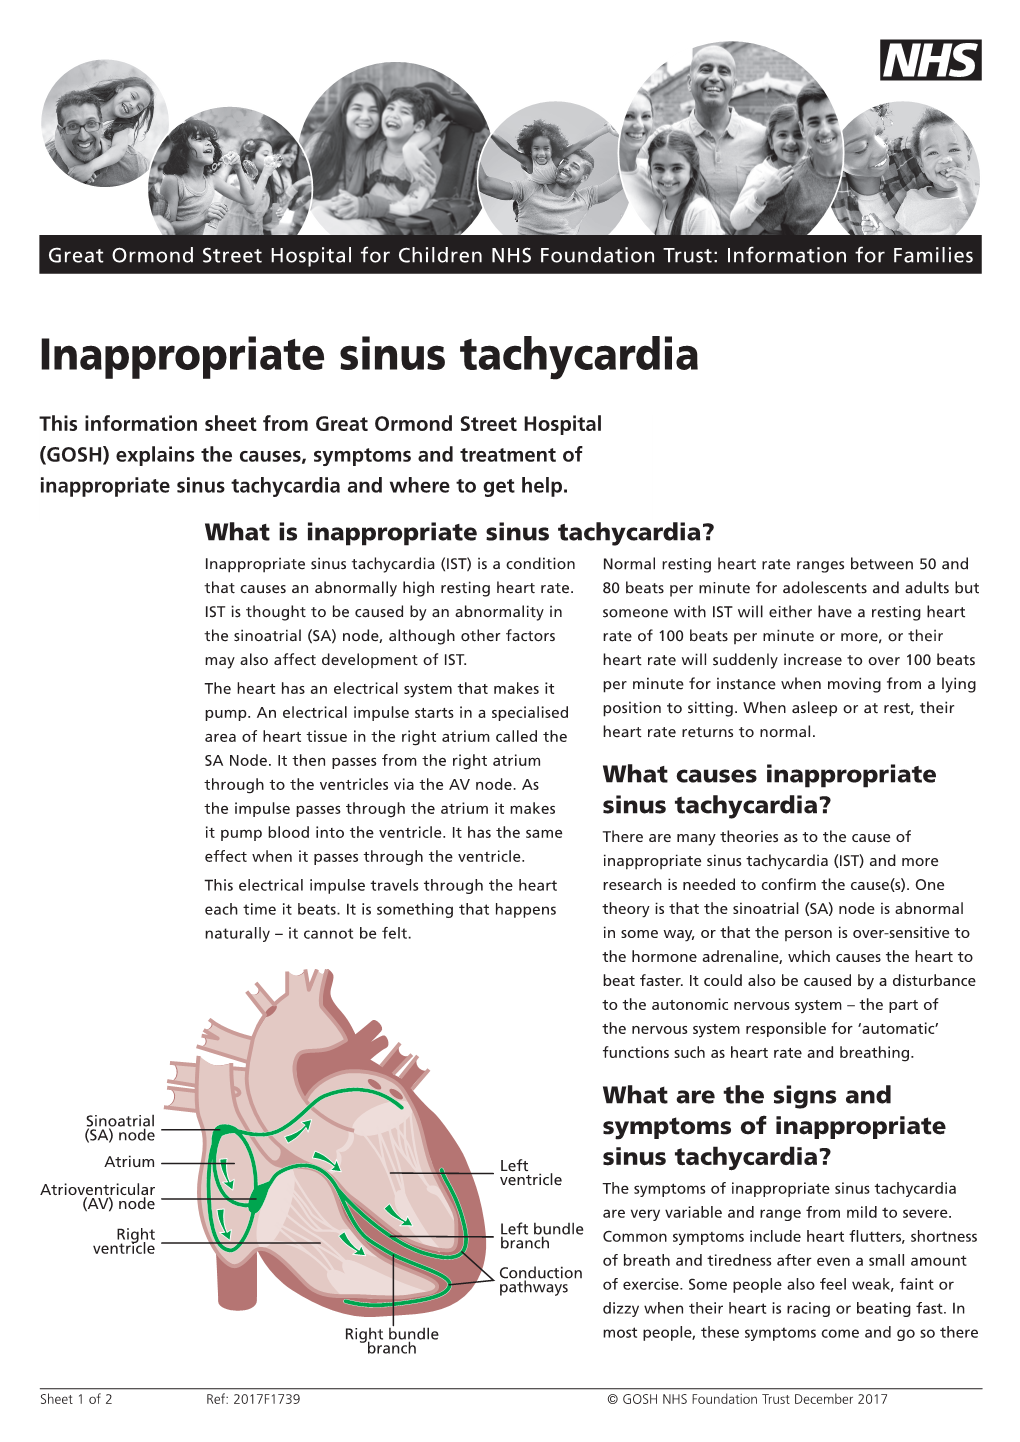 Inappropriate Sinus Tachycardia